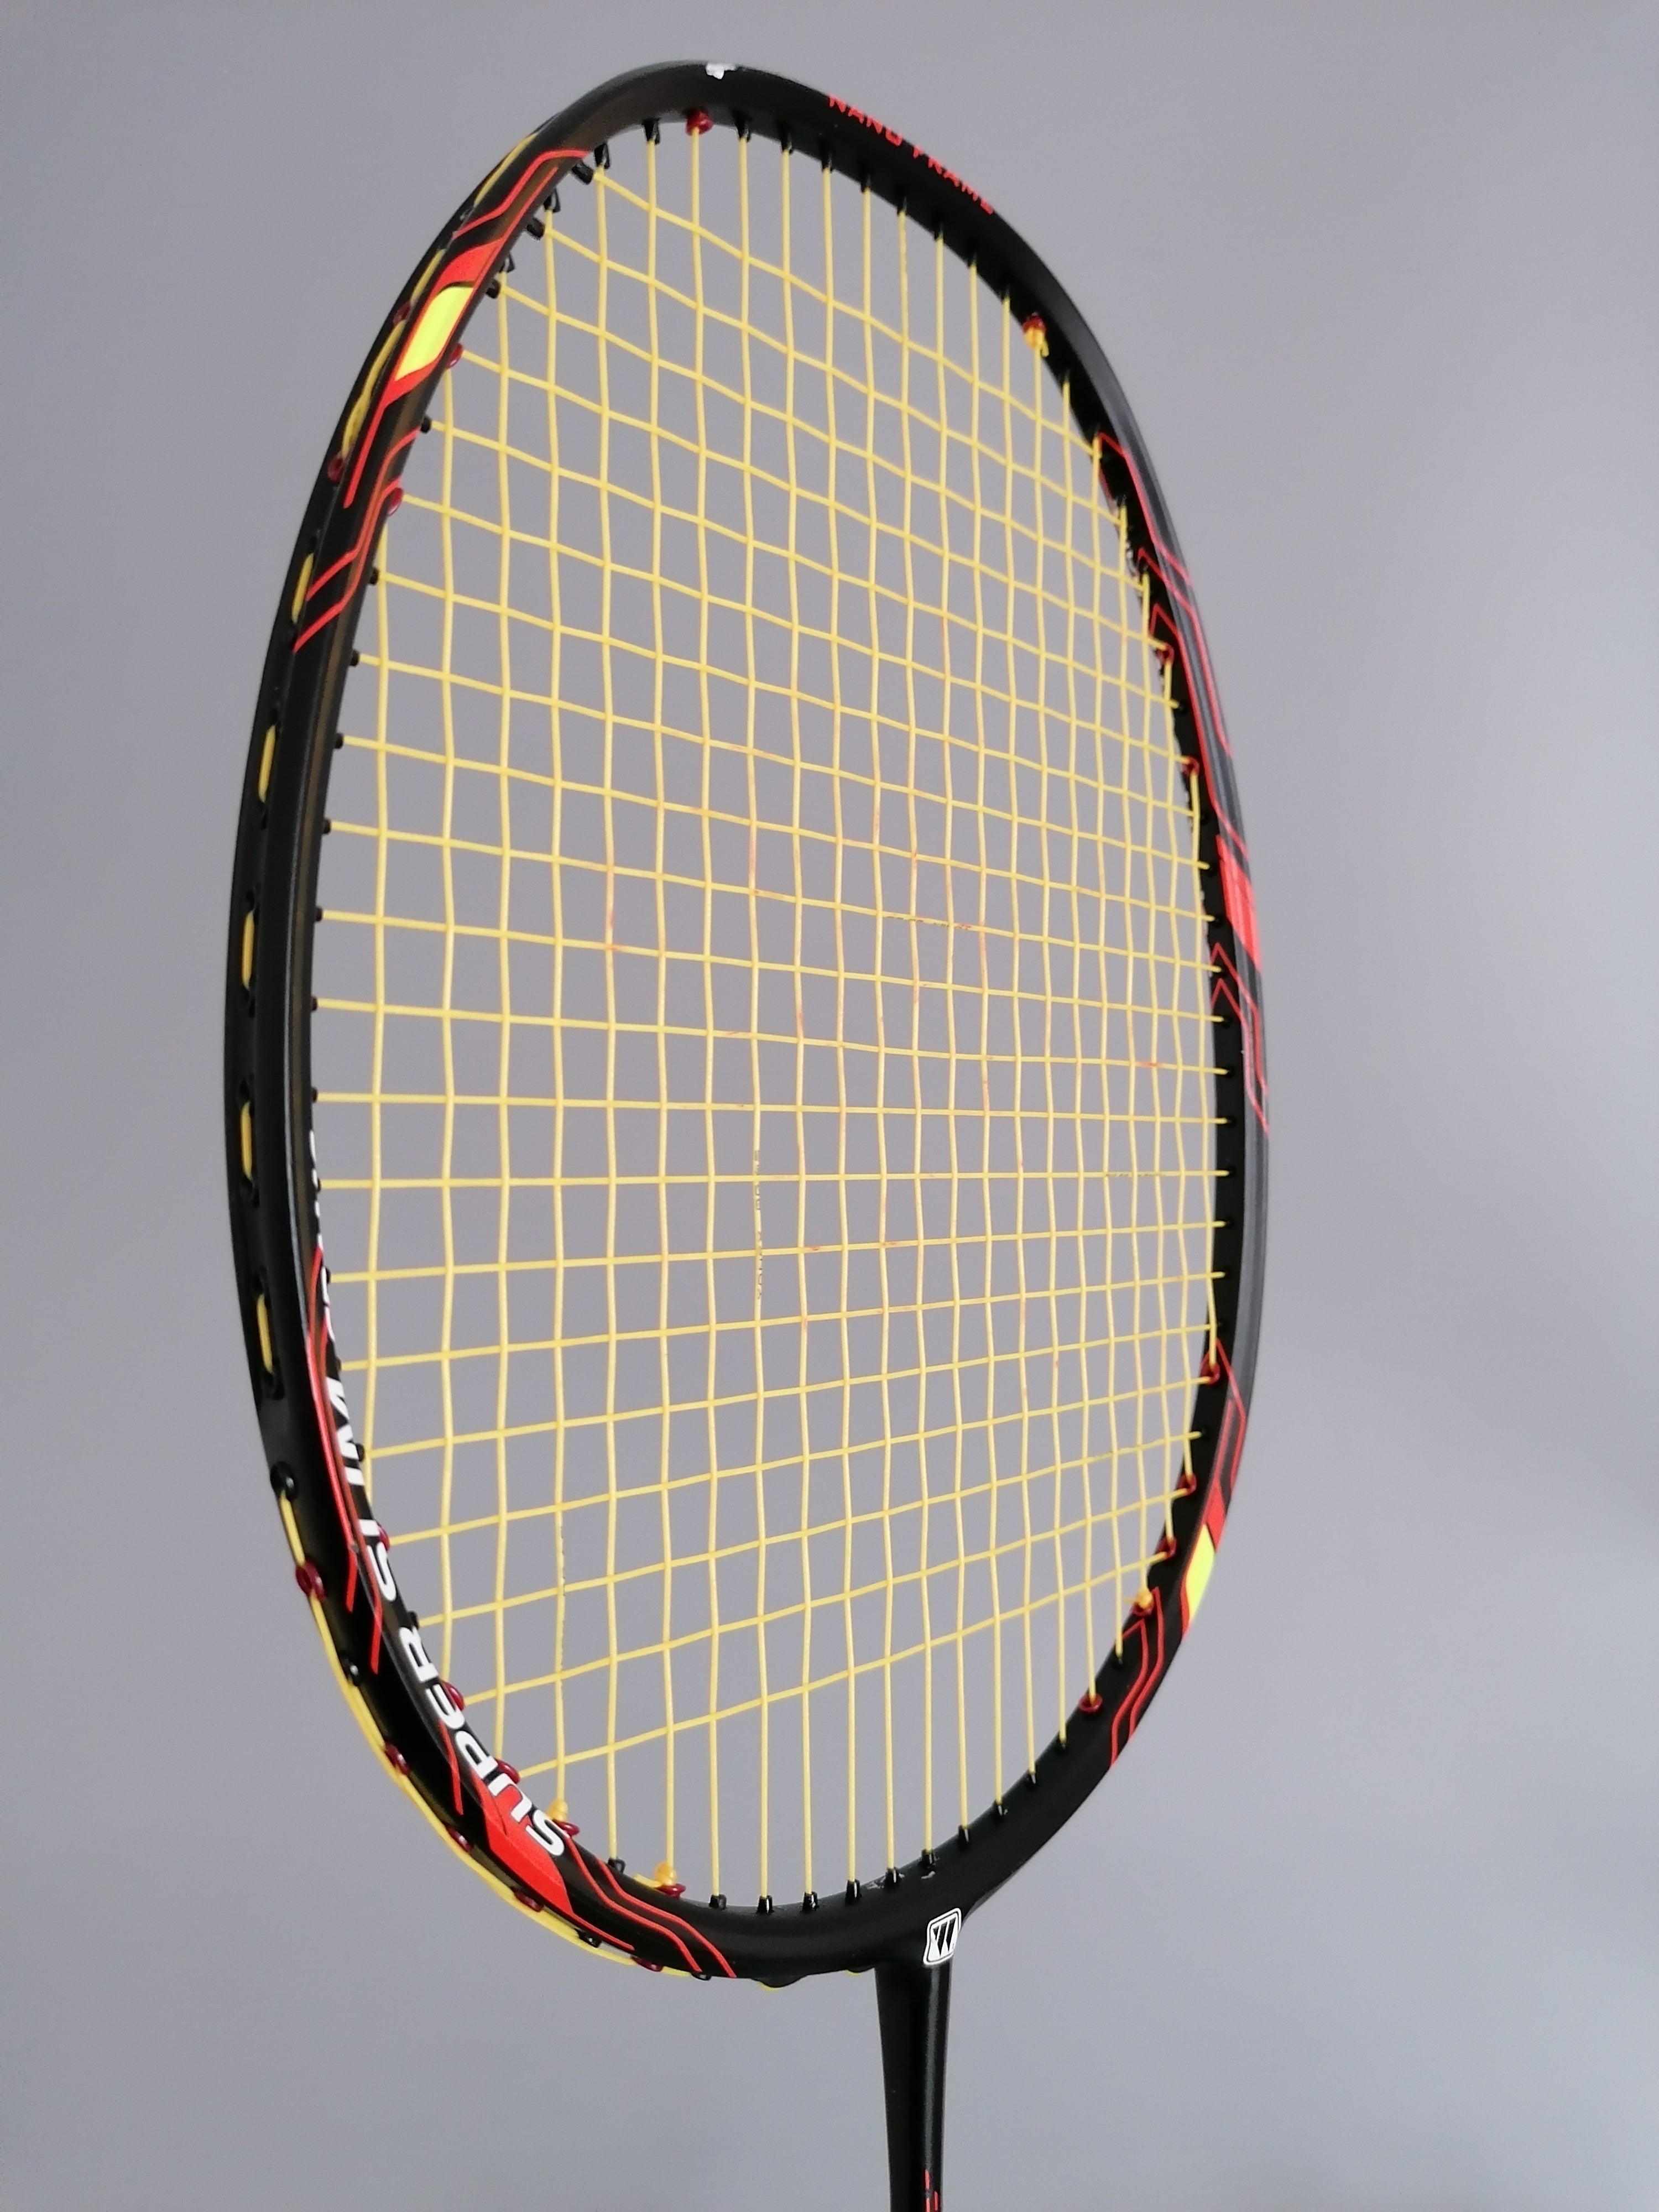 Whizz Carbon A630 Neo 8u Badminton Racket badminton racket review